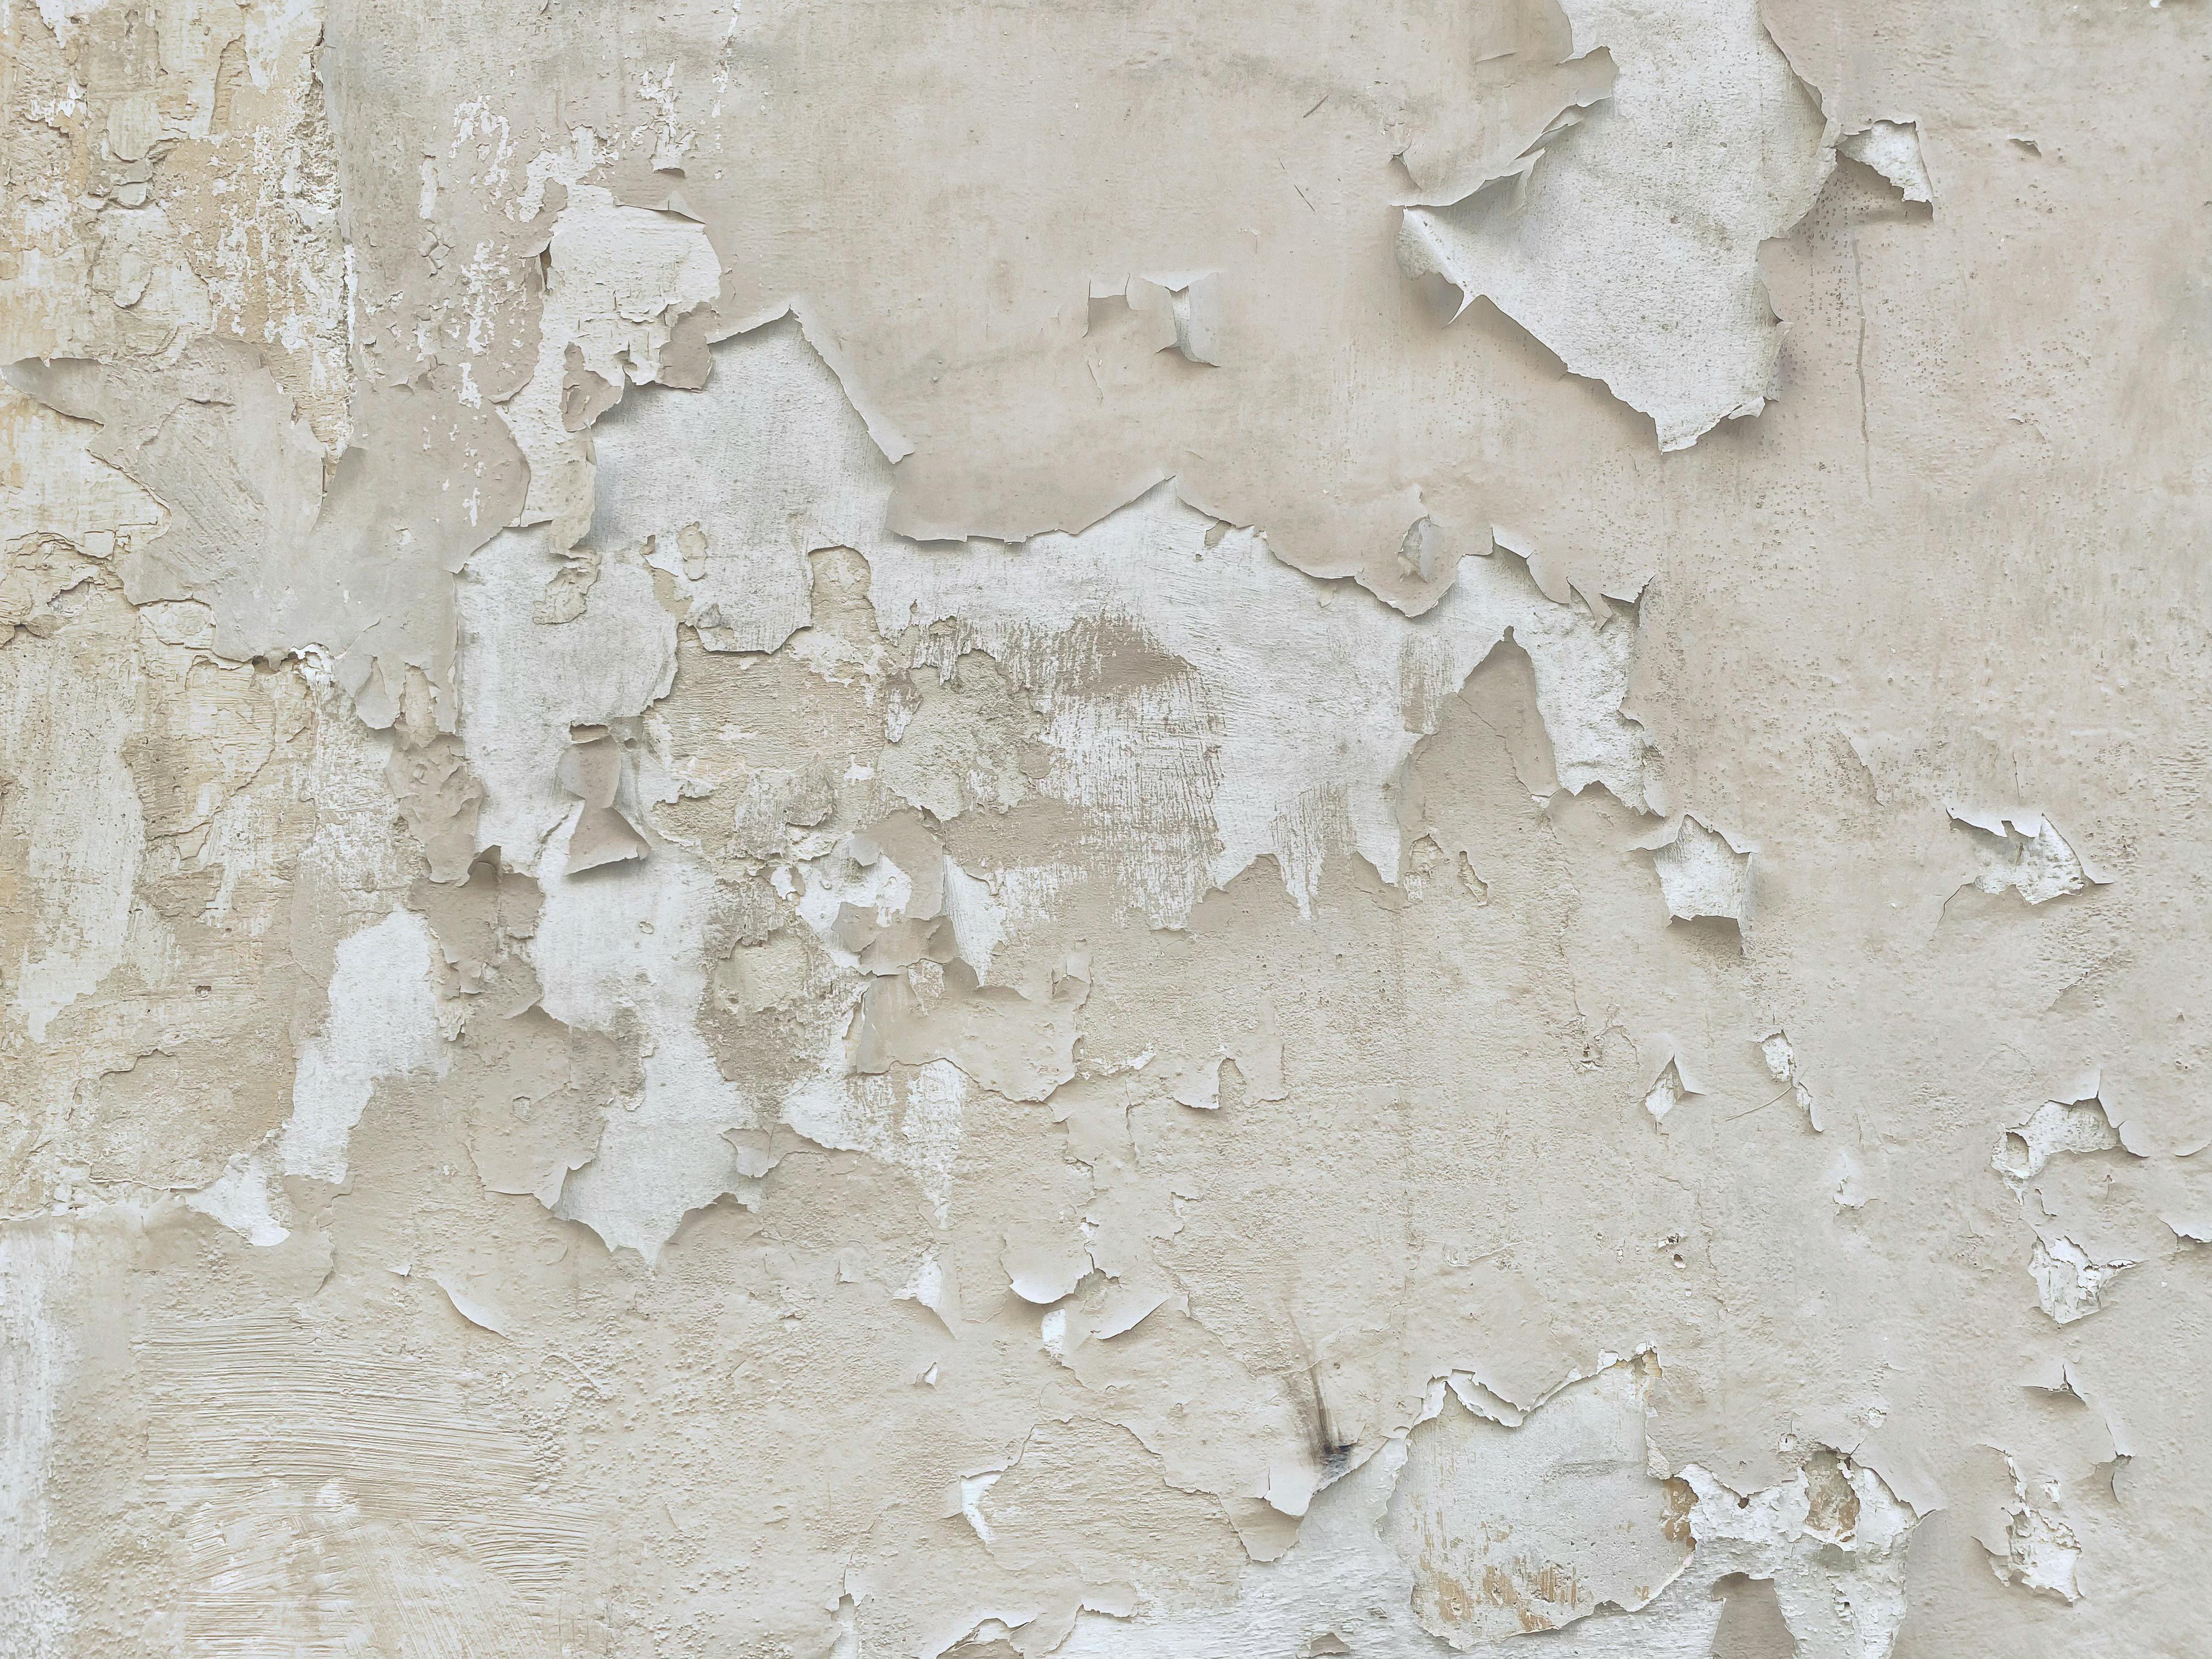 Peeling Paint Texture on Concrete Wall · Free Stock Photo